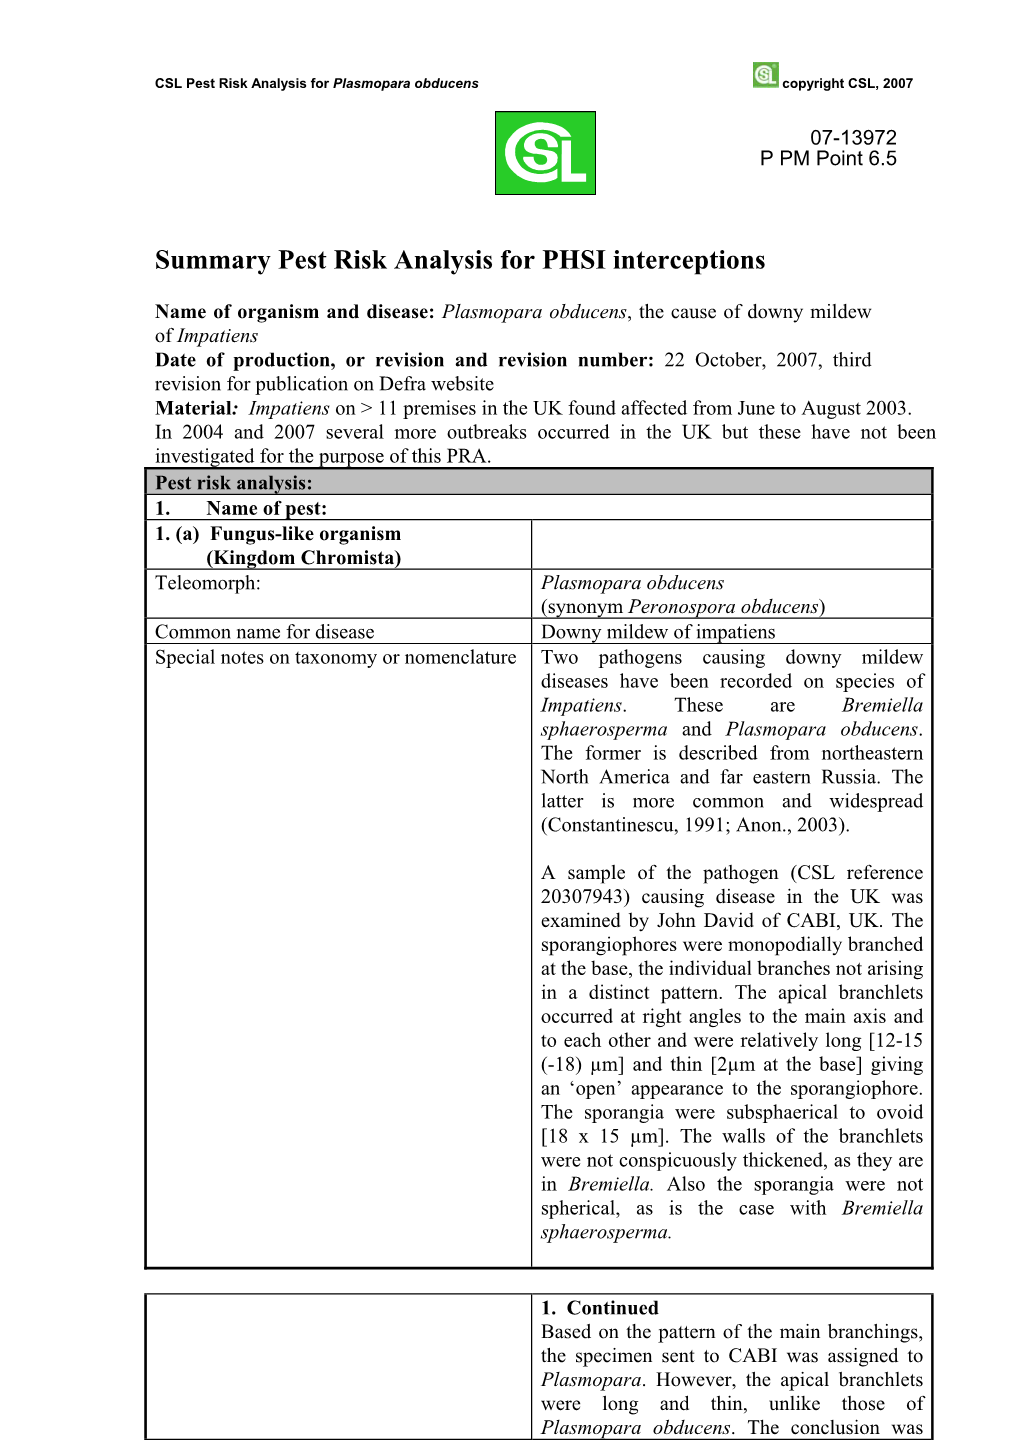 CSL Pest Risk Analysis for Plasmopara Obducens Copyright CSL, 2007